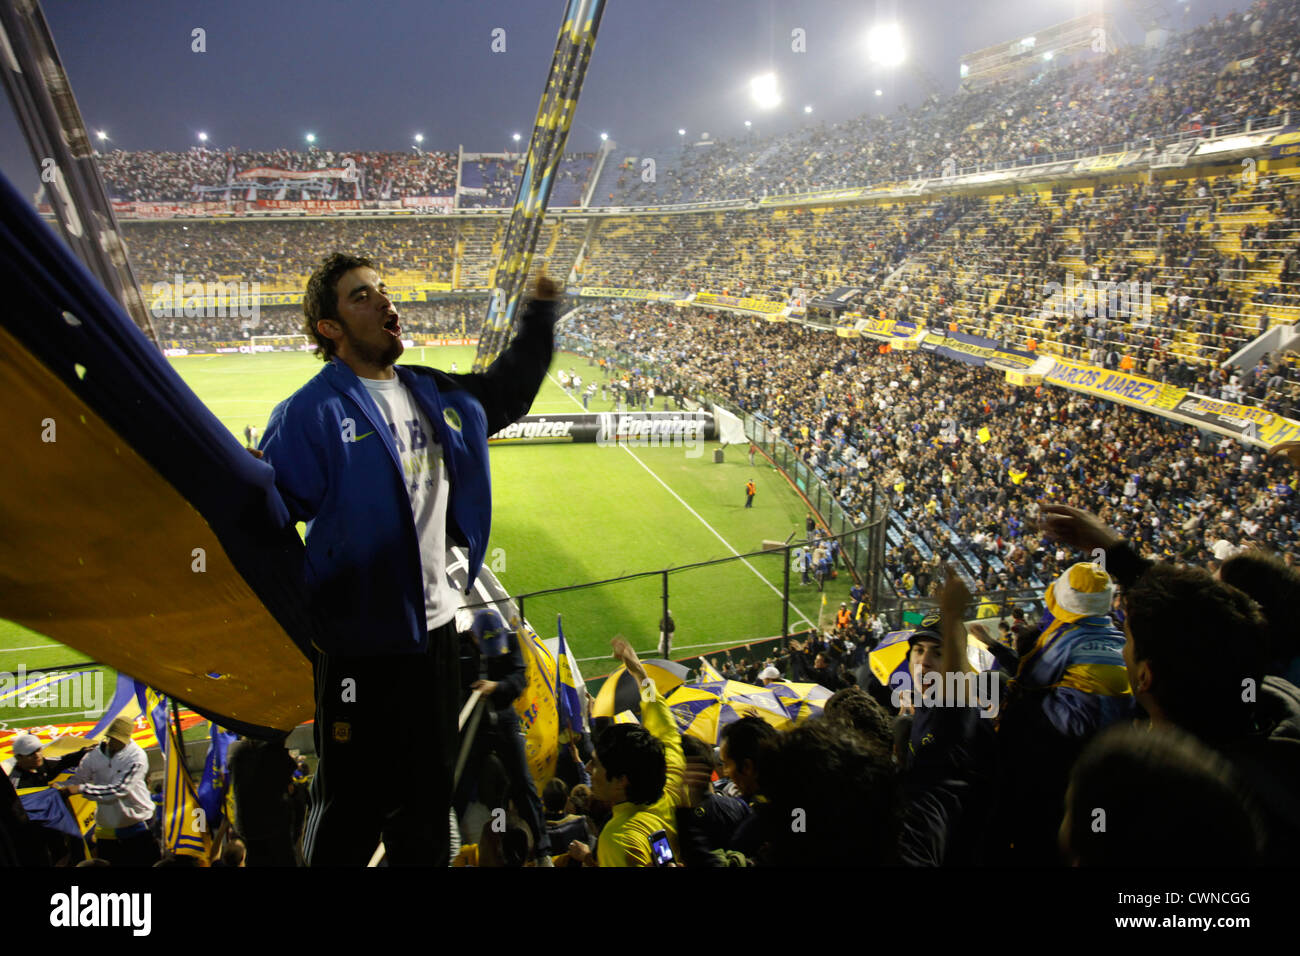 Partido de fútbol de Boca Juniors en la Bombonera, estadio de La Boca, Buenos Aires, Argentina. Foto de stock